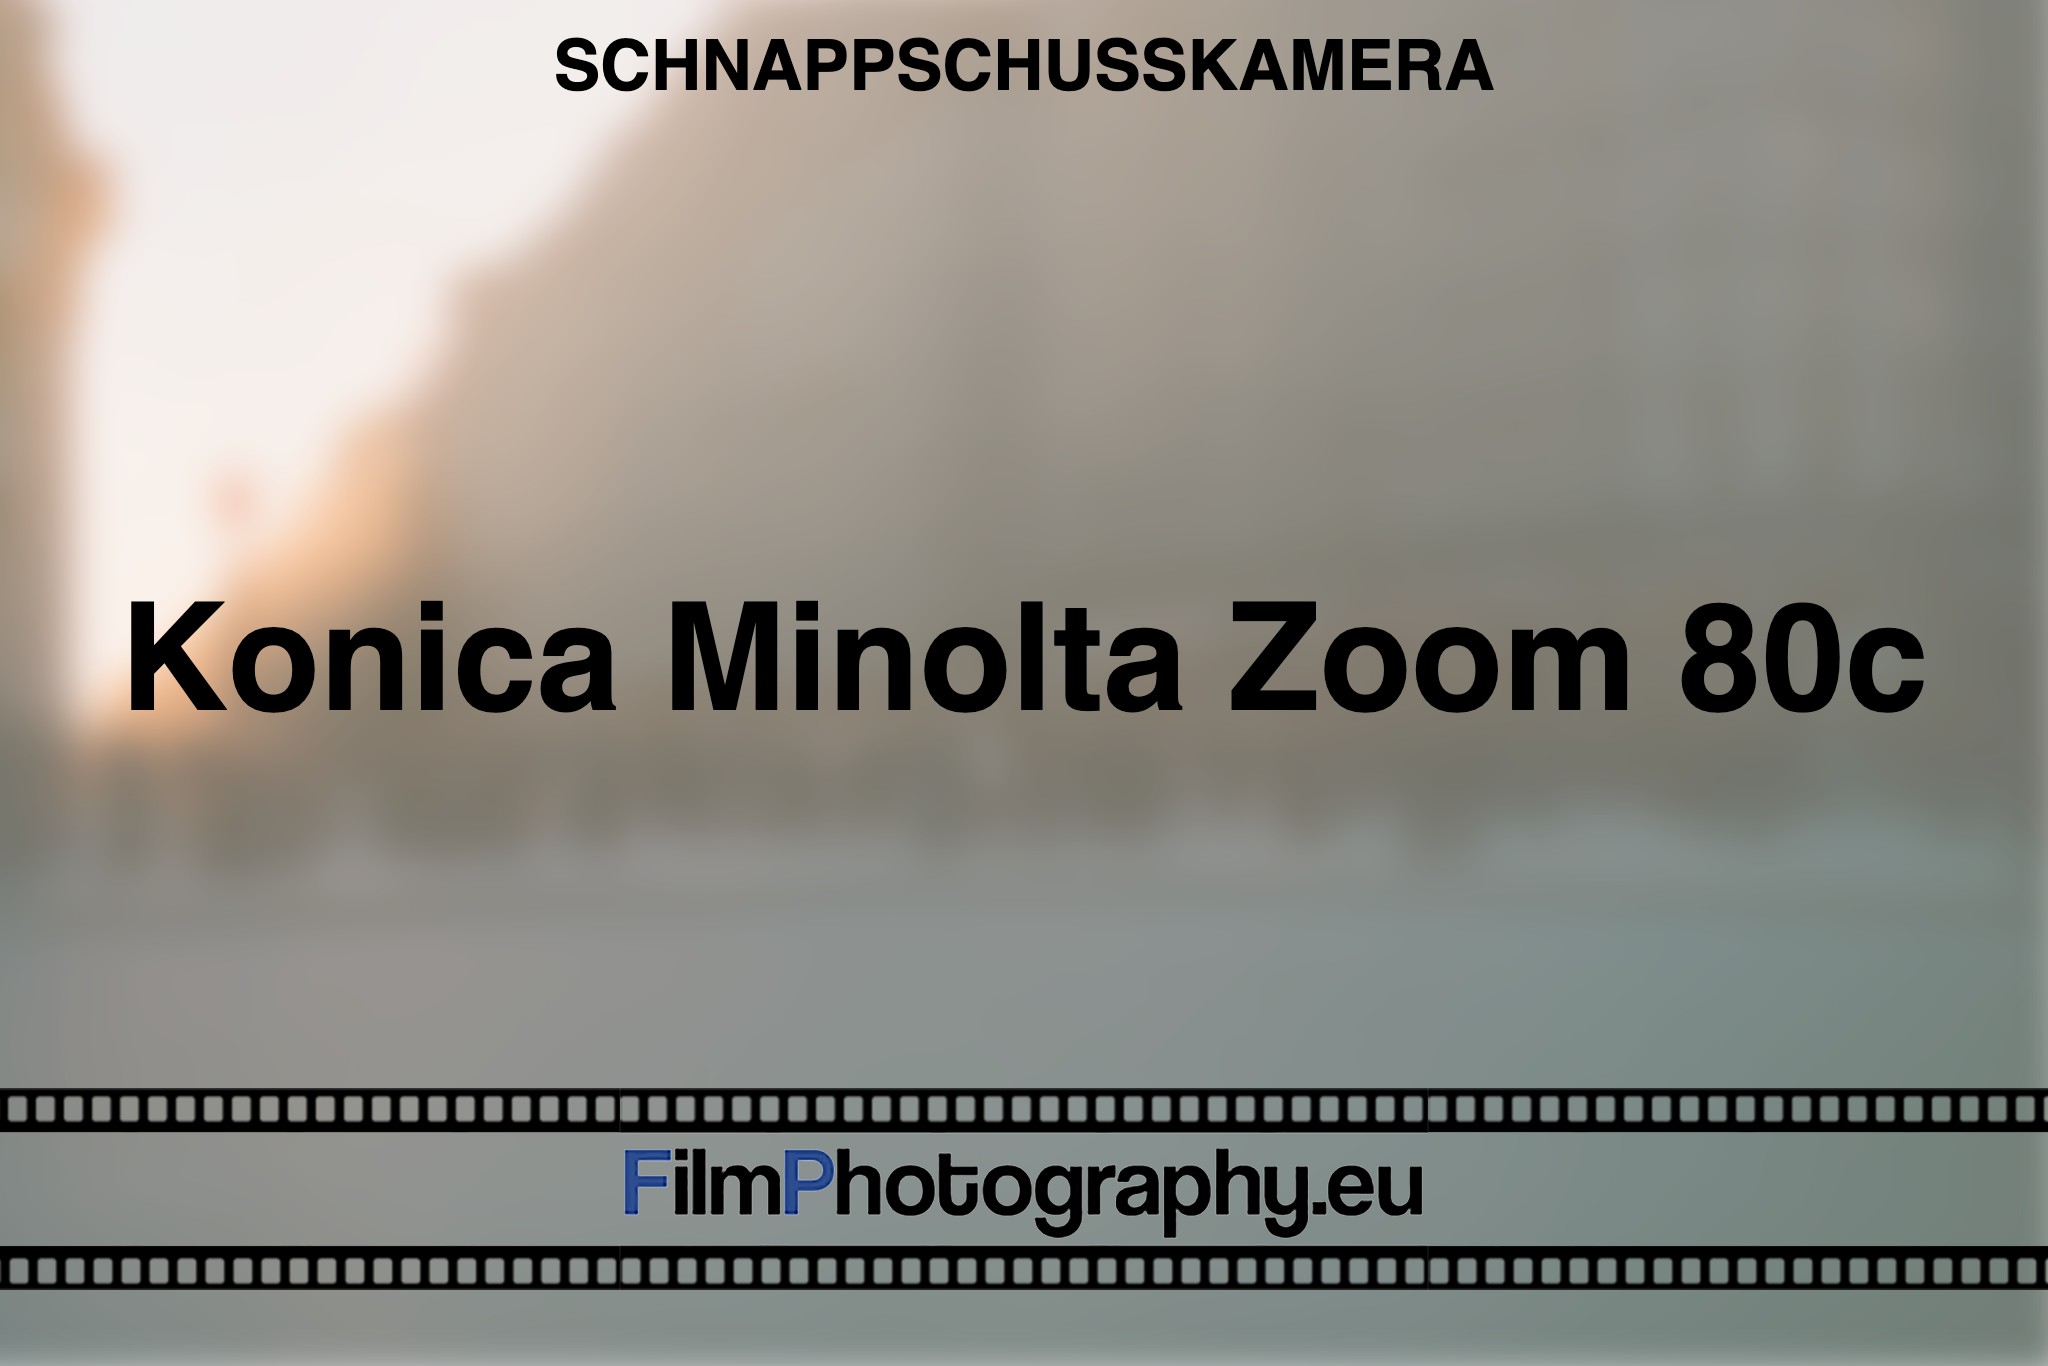 konica-minolta-zoom-80c-schnappschusskamera-bnv